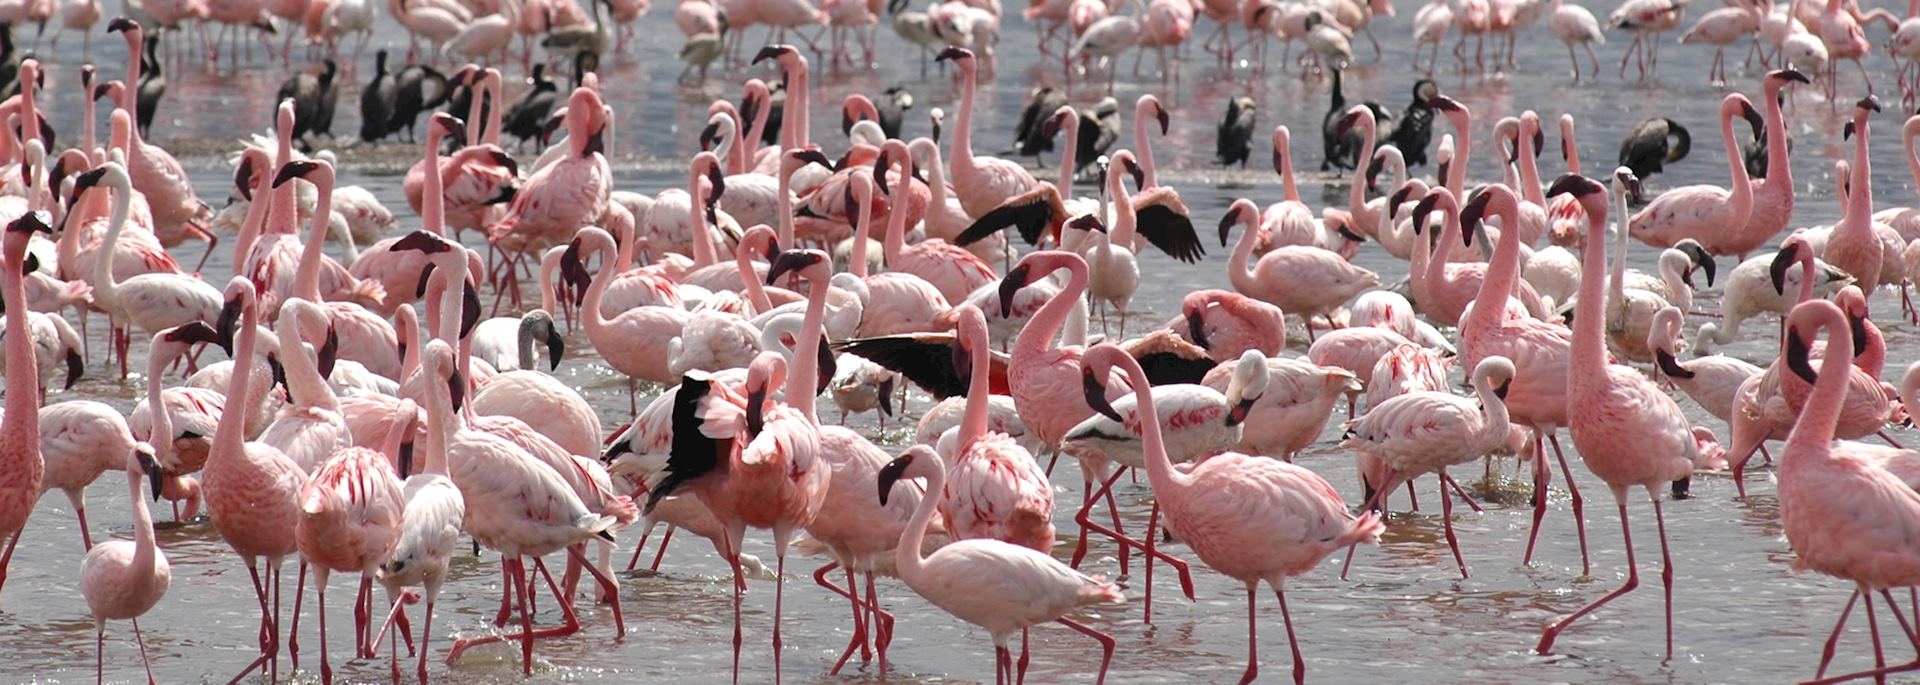 Flamingos, Lake Nakuru